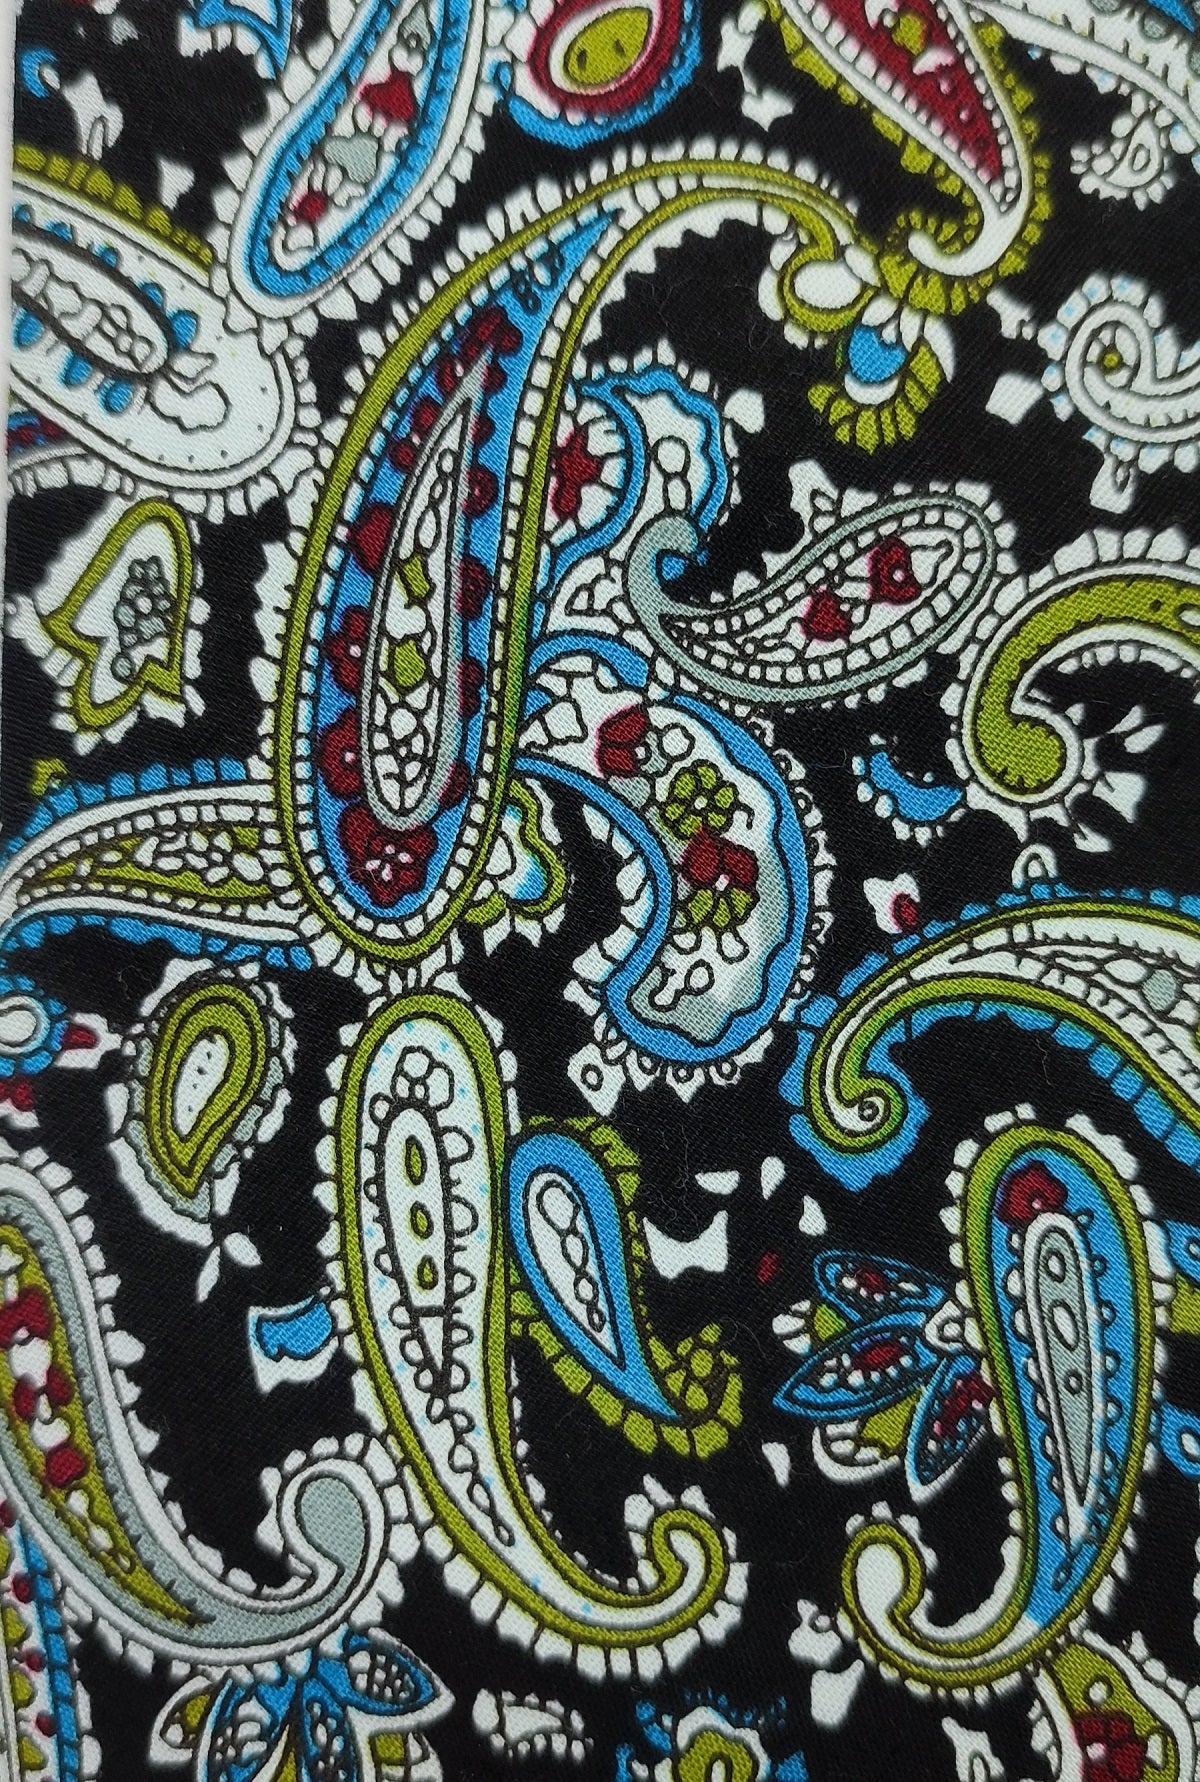 Multicolor Paisley Cotton Necktie/With Pocket Square